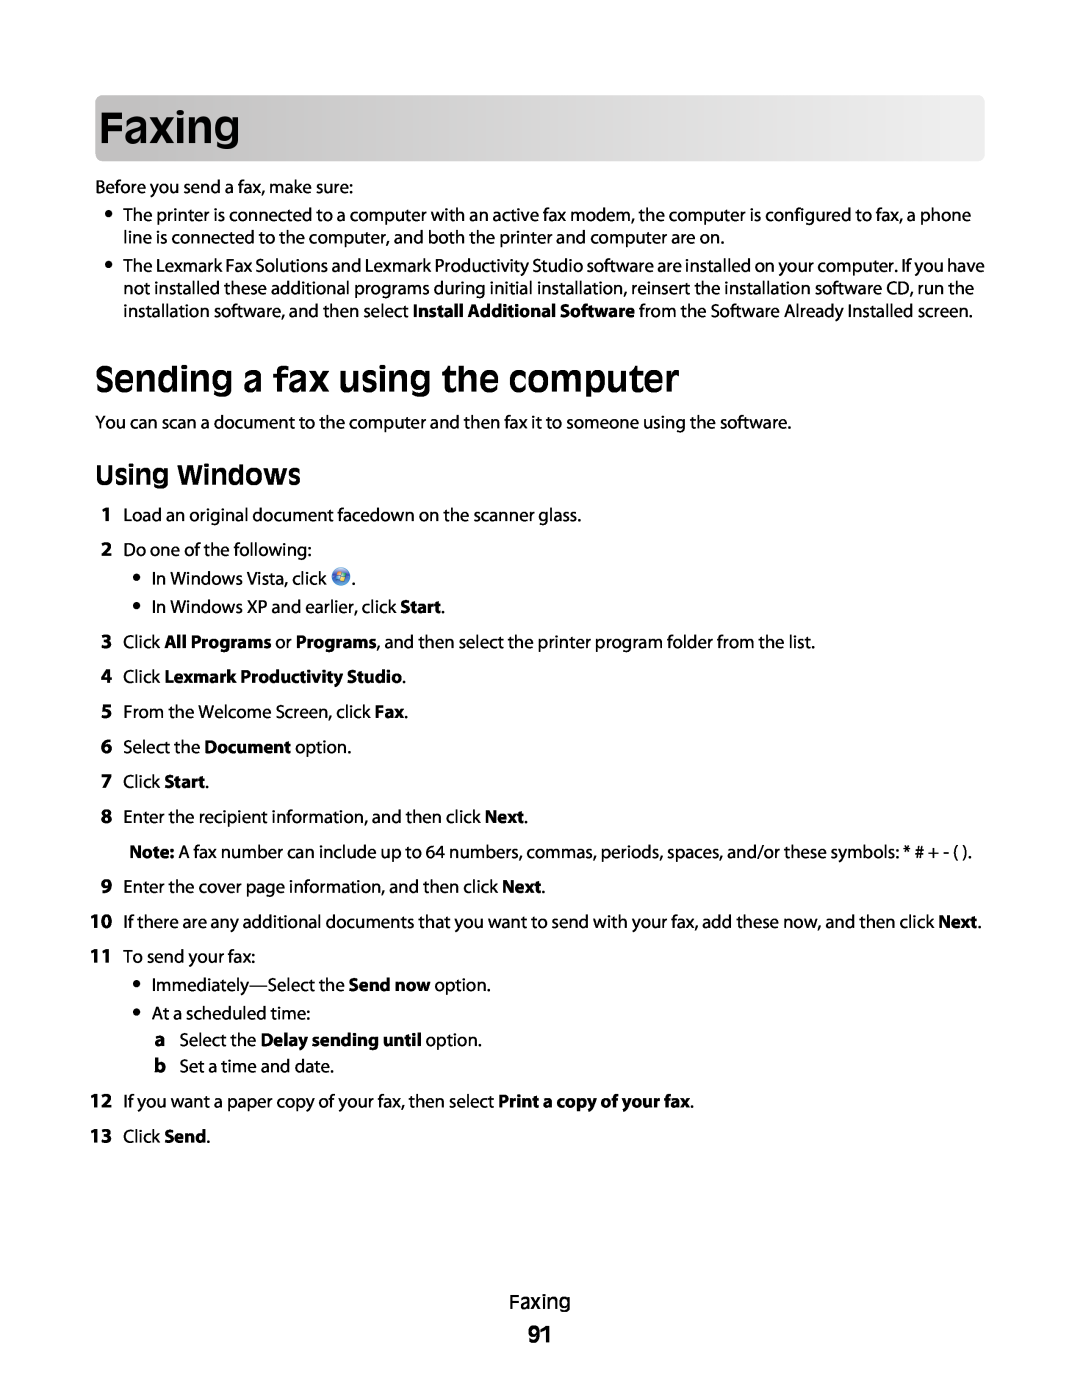 Lexmark 3600, 4600 manual Faxing, Sending a fax using the computer, Using Windows, Click Lexmark Productivity Studio 